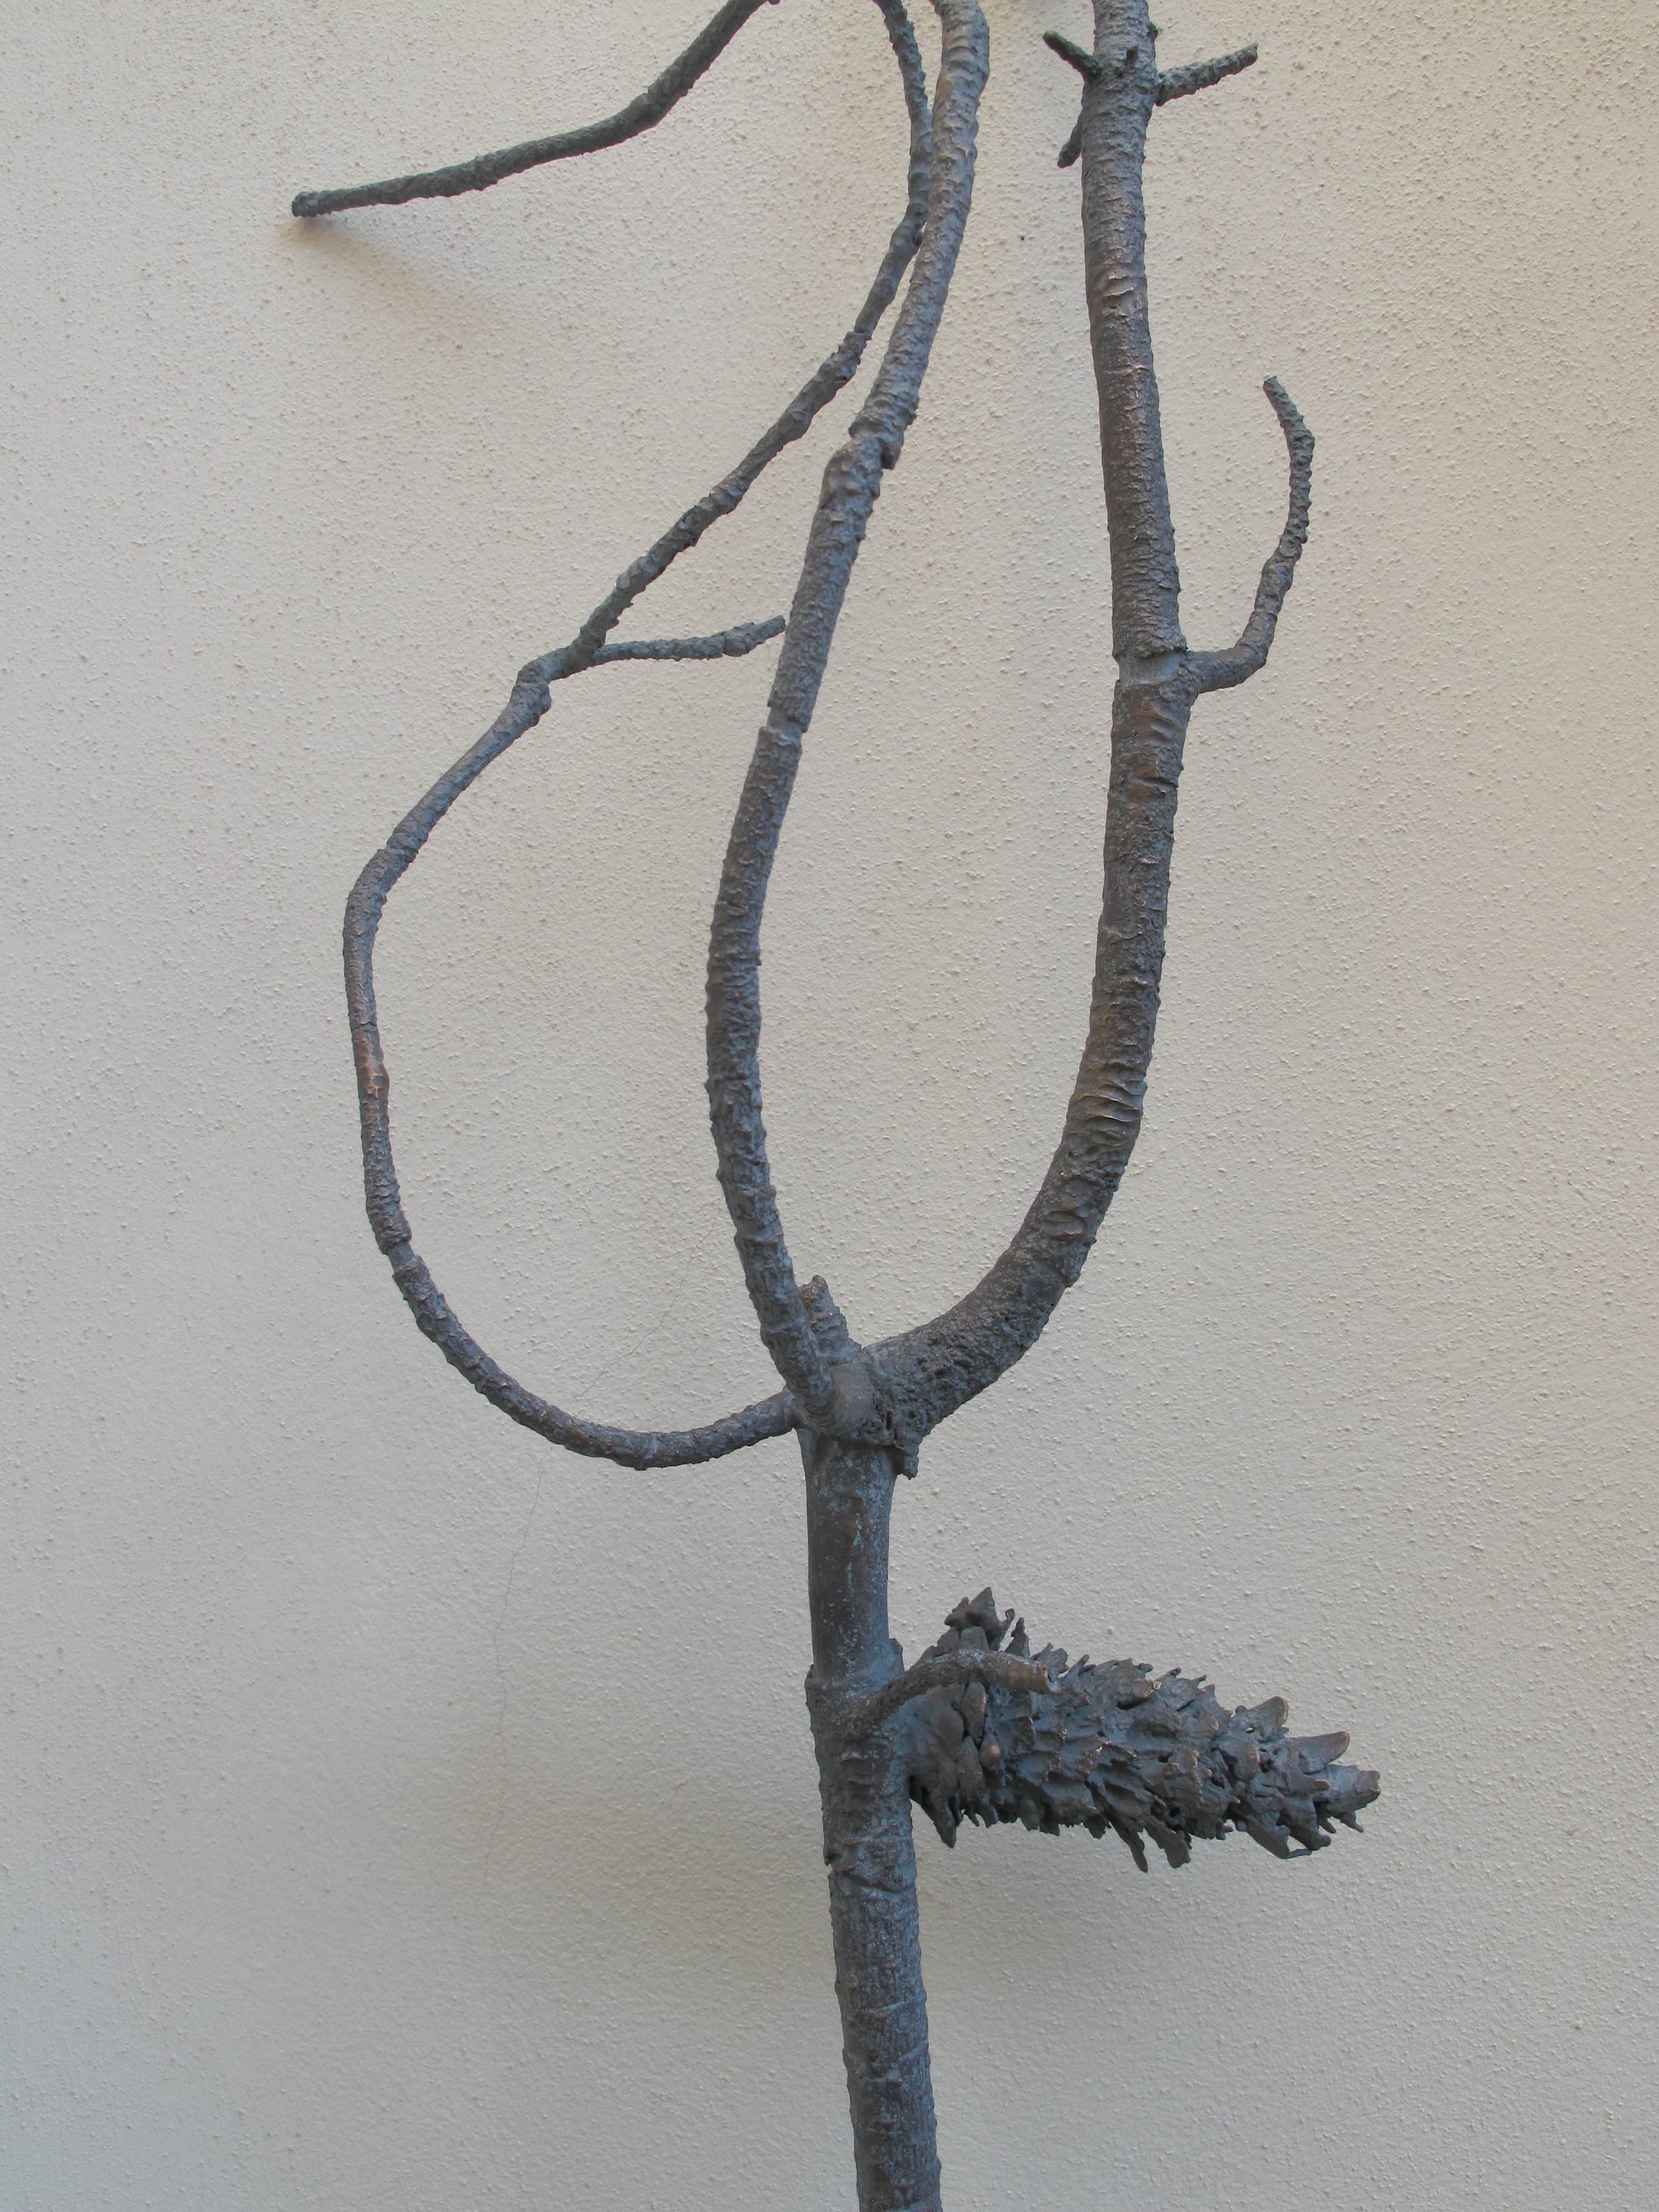 S.Binion, Branch, bronzo patinato,2017, 77x29 cm